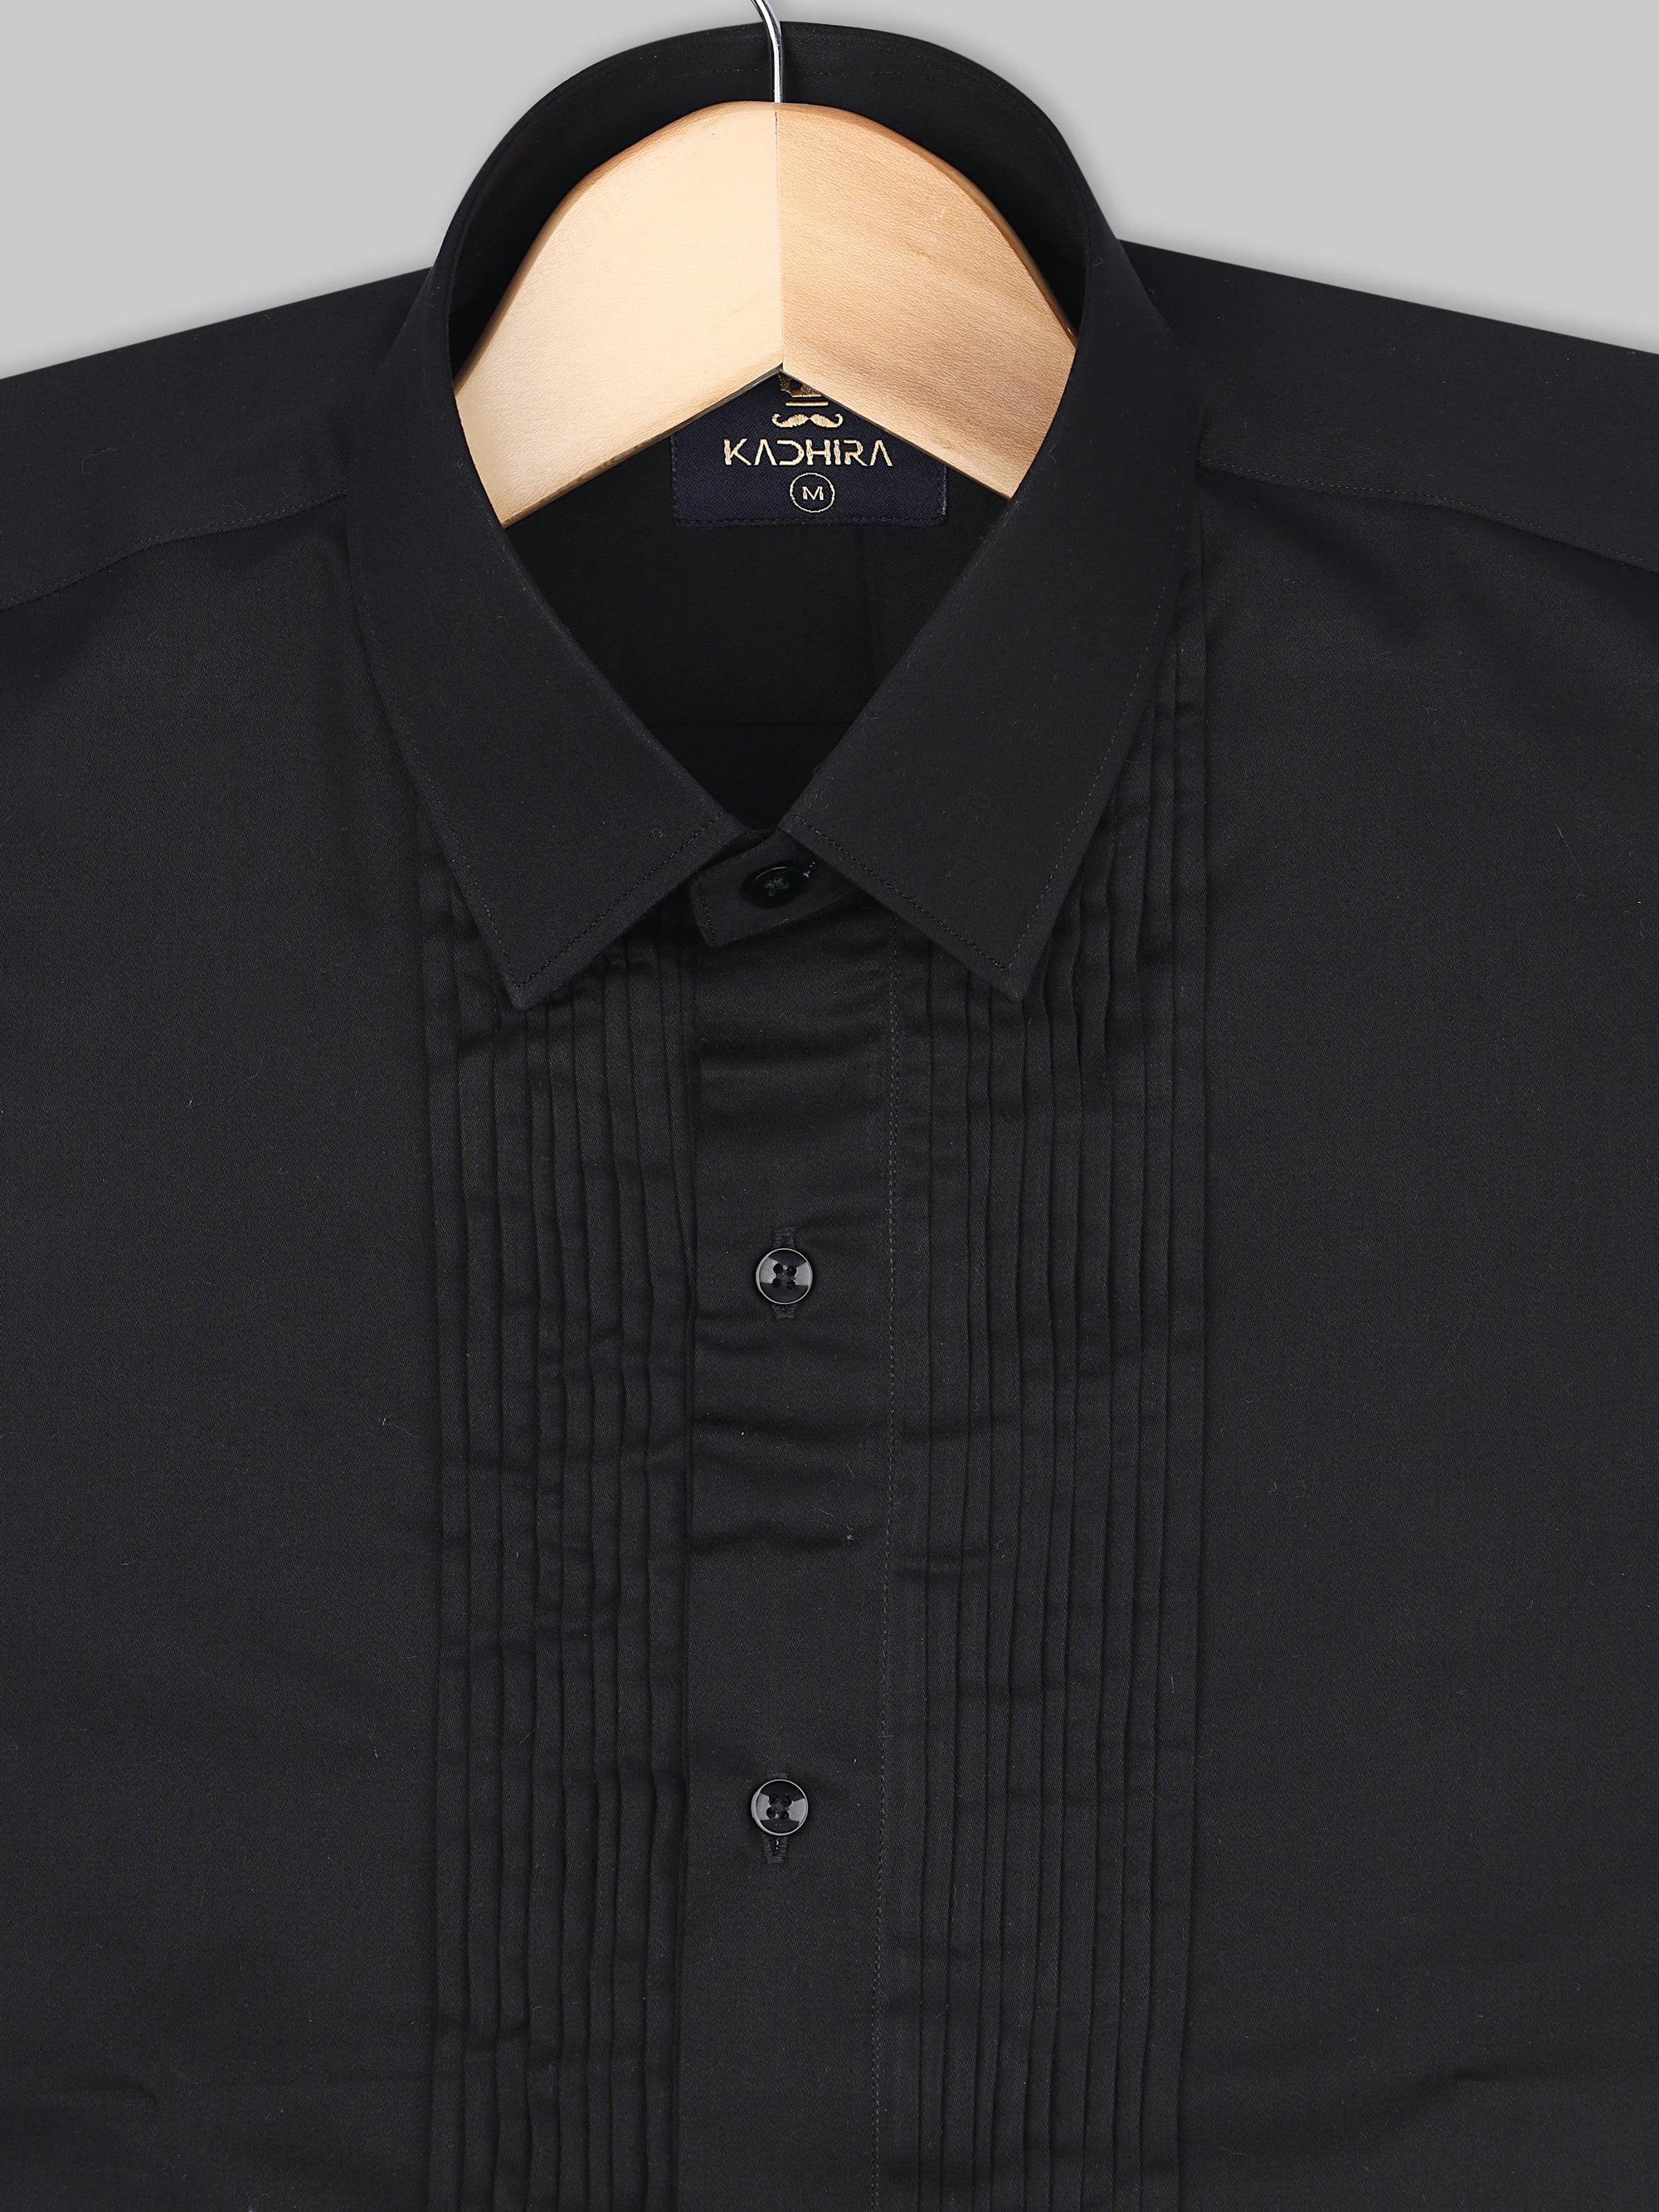 Smoky Black Subtle Sheen Tuxedo Pattern Premium Cotton Shirt